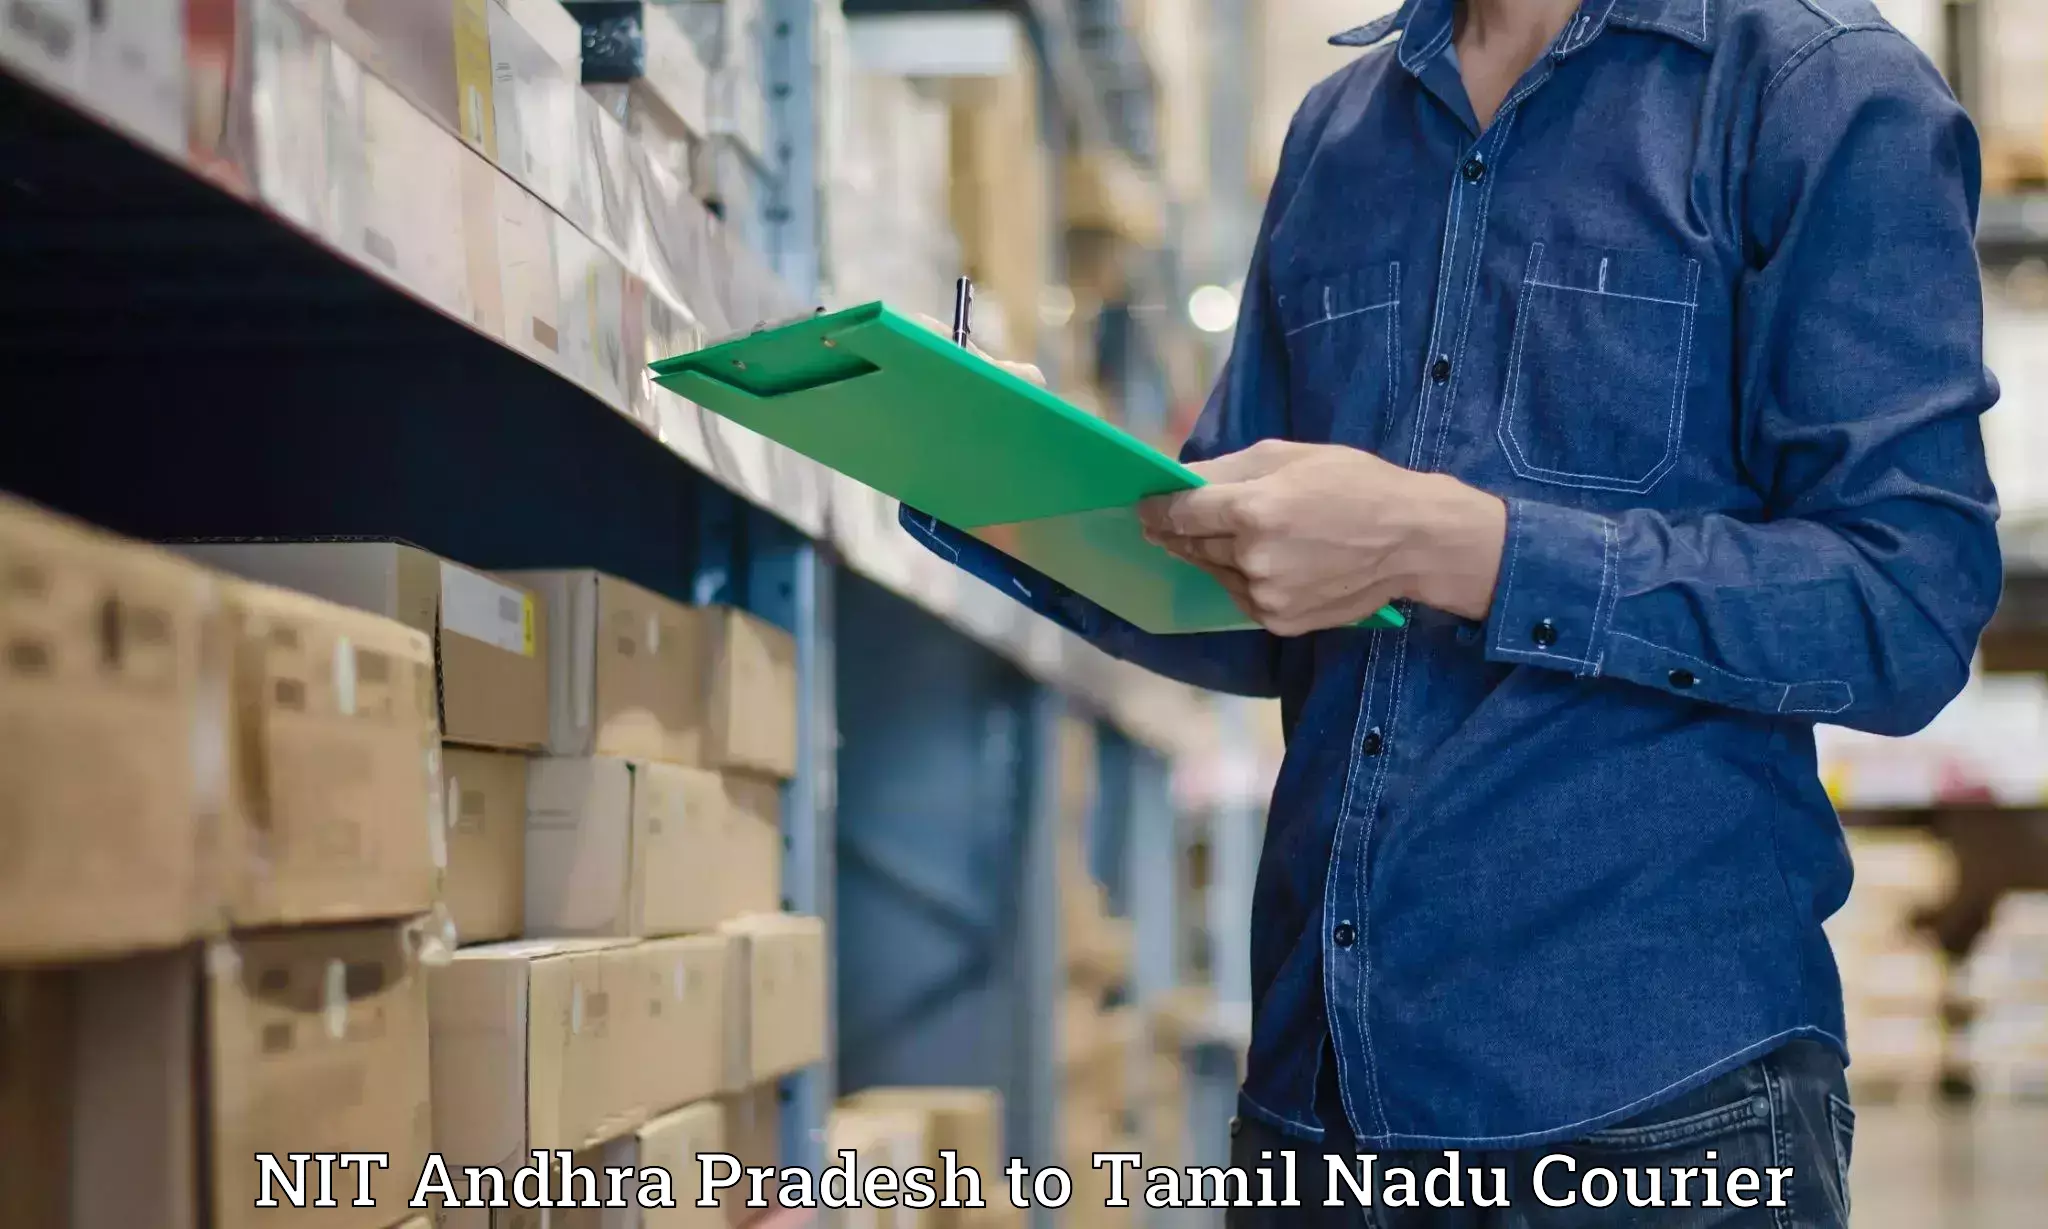 Digital courier platforms NIT Andhra Pradesh to Tuticorin Port